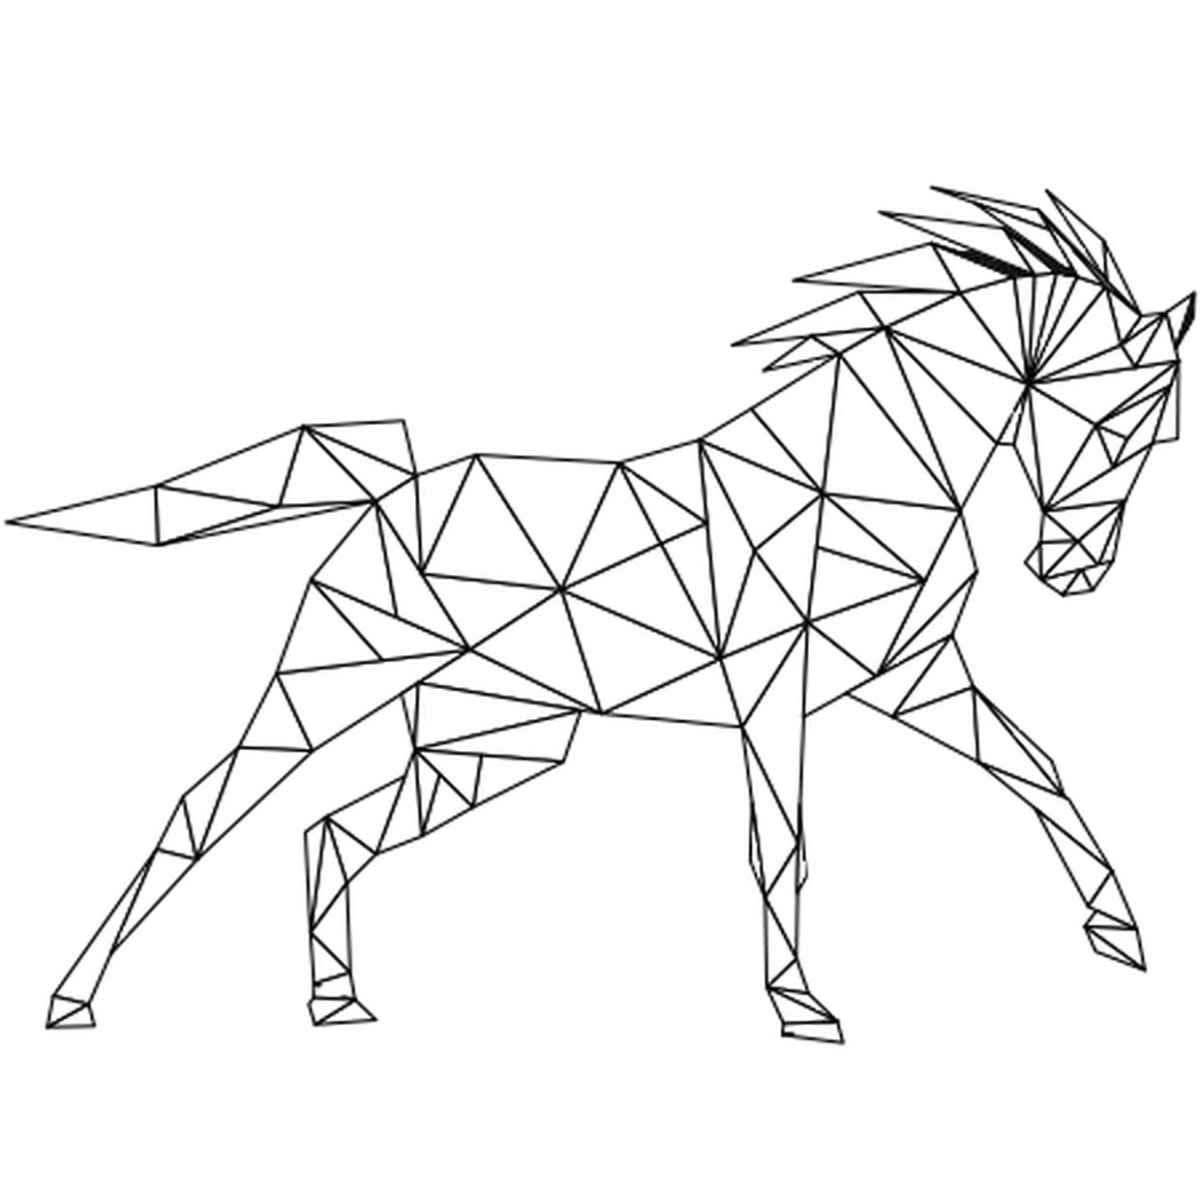 Лошадь рисунок из фигур - 68 фото